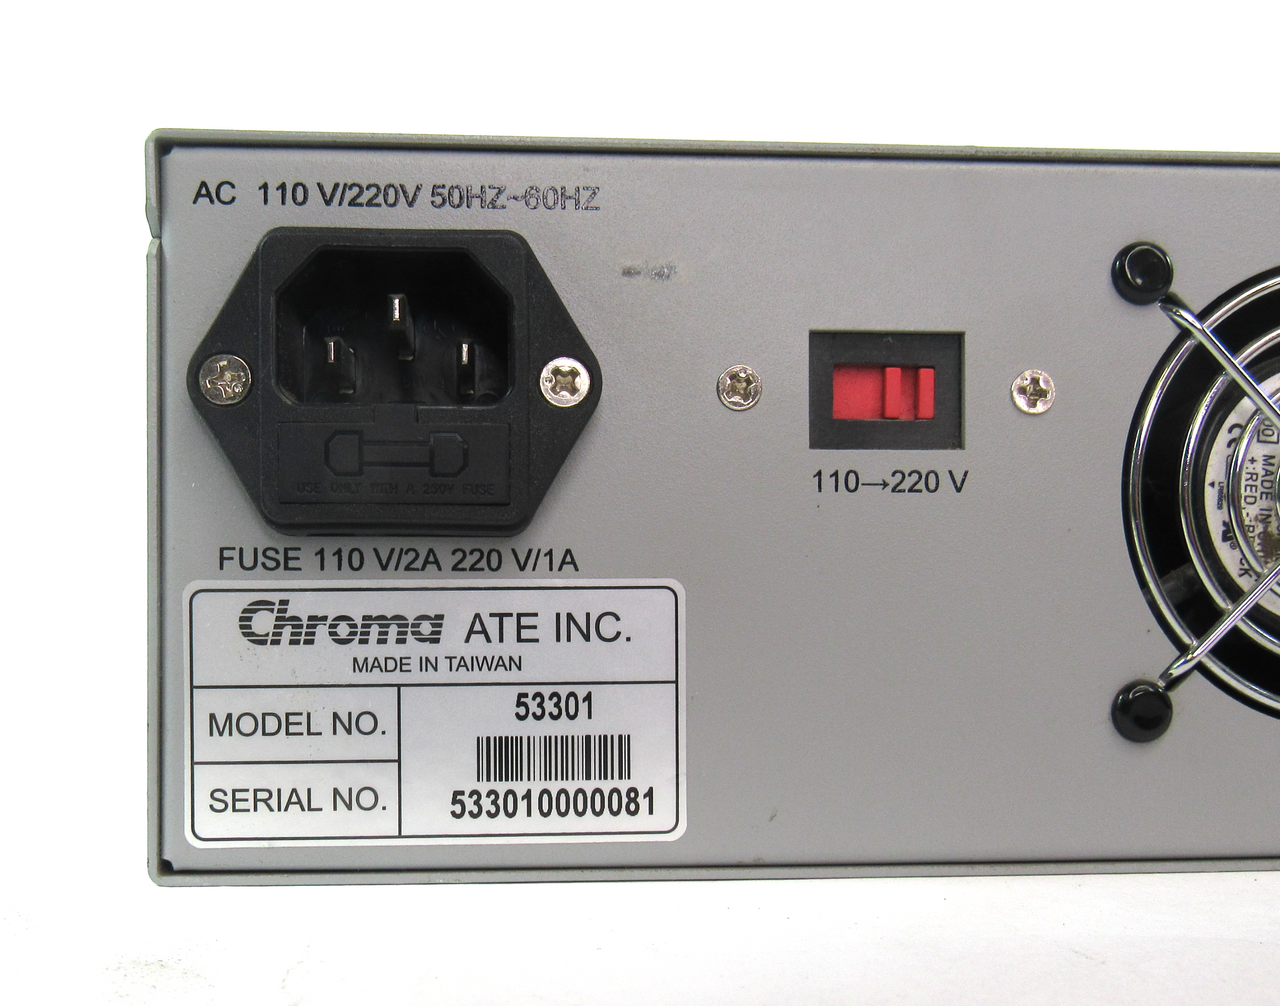 Chroma 53301 Solar Cell I-V Tester 110V/220Vac